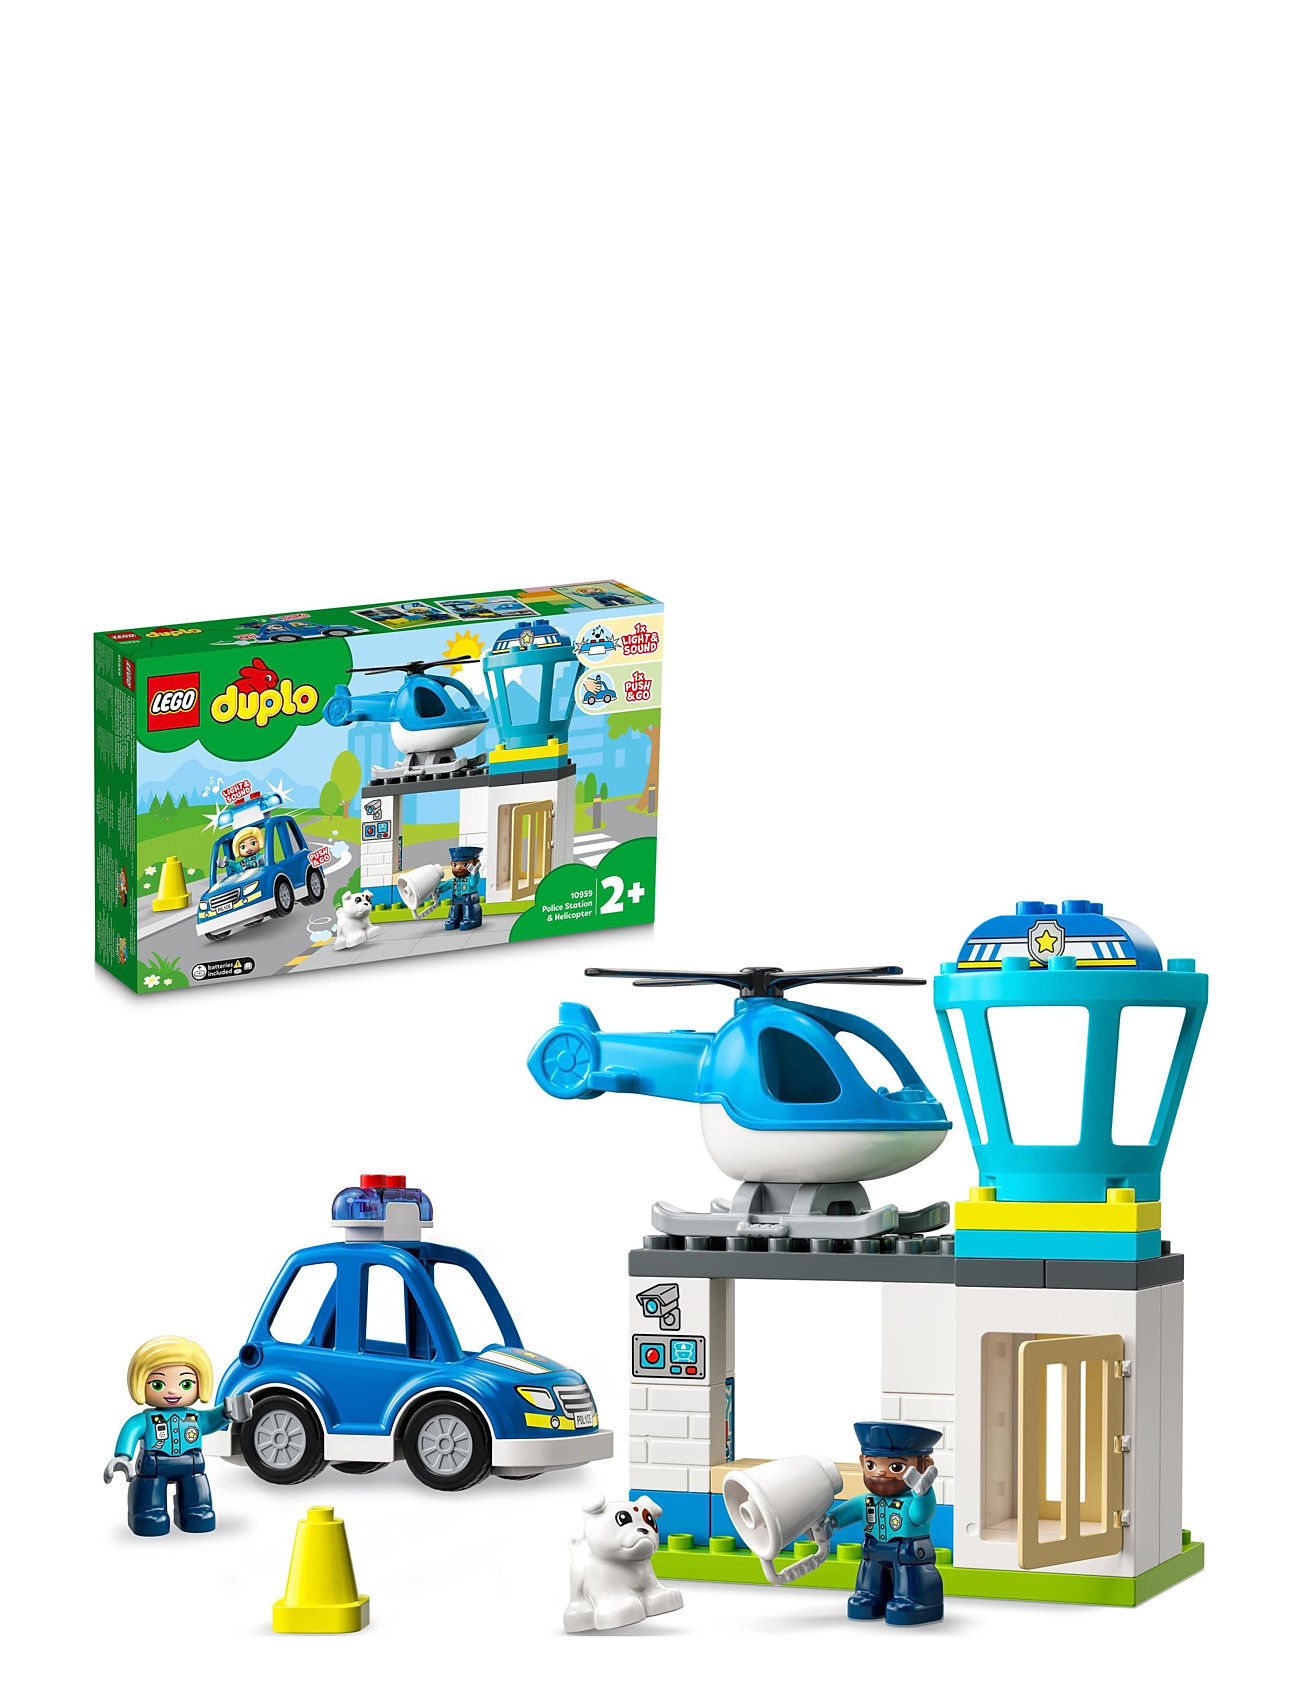 Rescue Police Station & Helicopter Toy Set Toys Lego Toys Lego duplo Multi/patterned LEGO